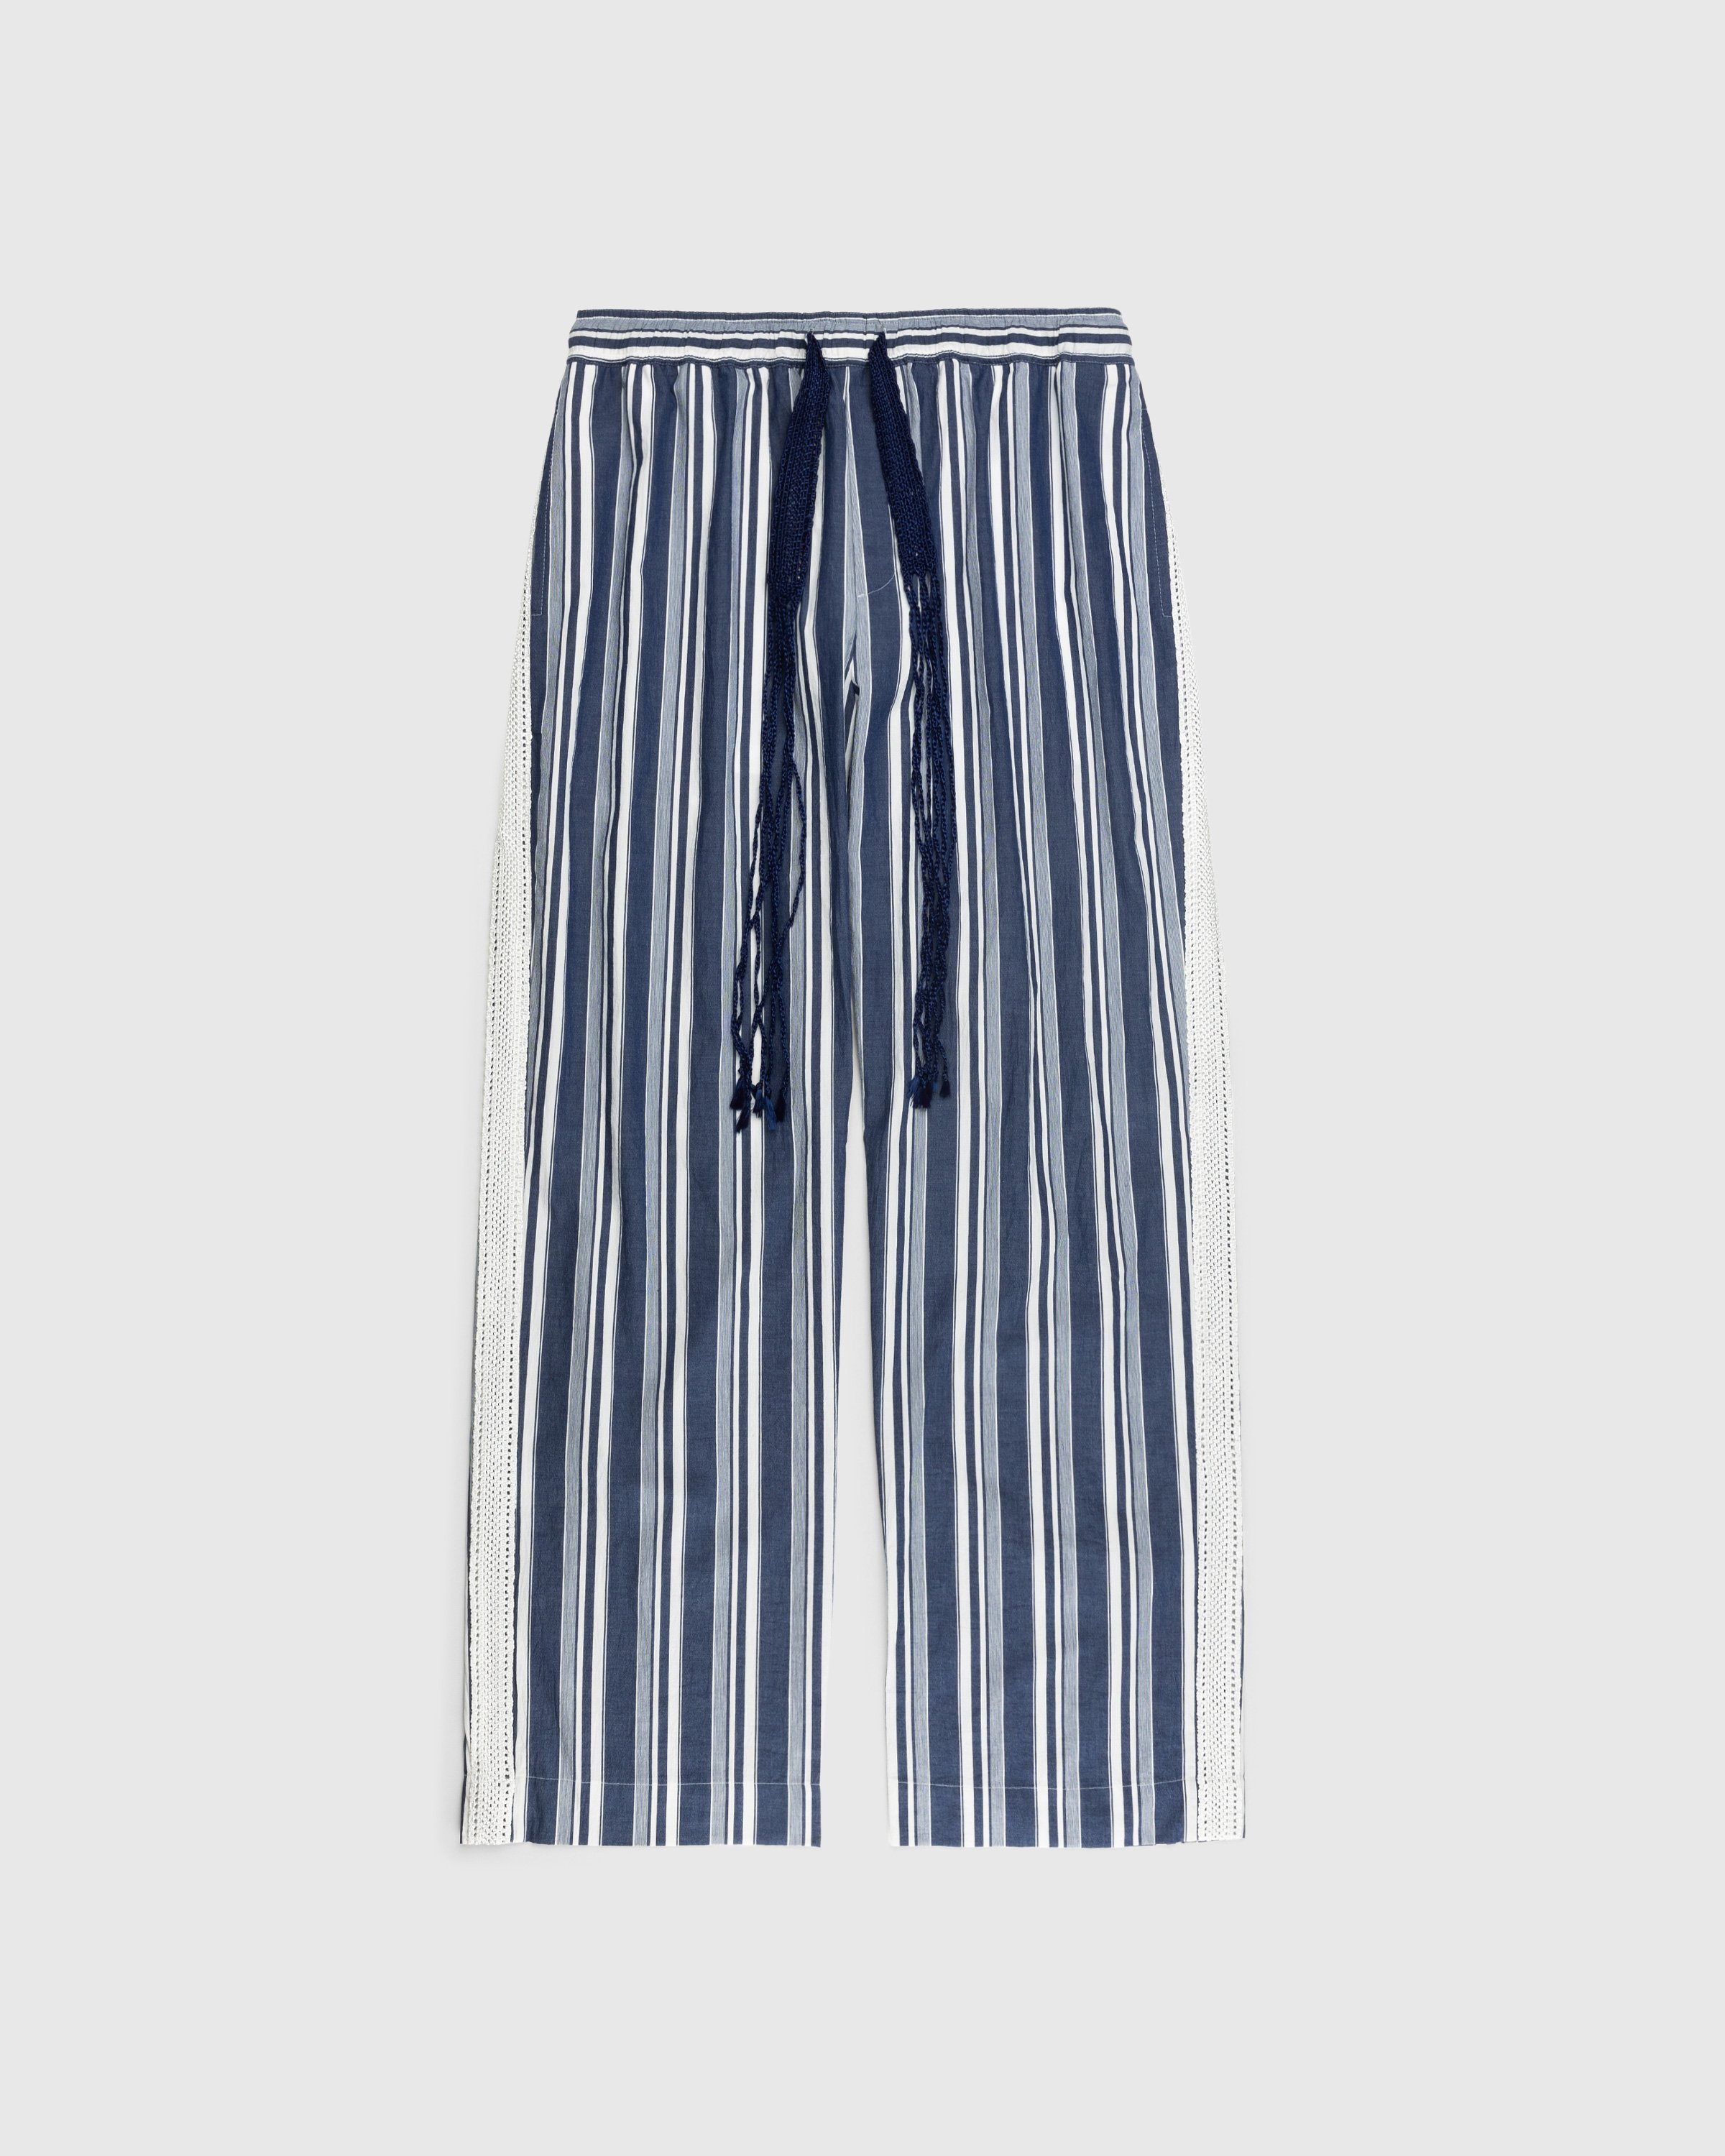 Wales Bonner - Soul Pyjama Trousers - Clothing - Blue - Image 1